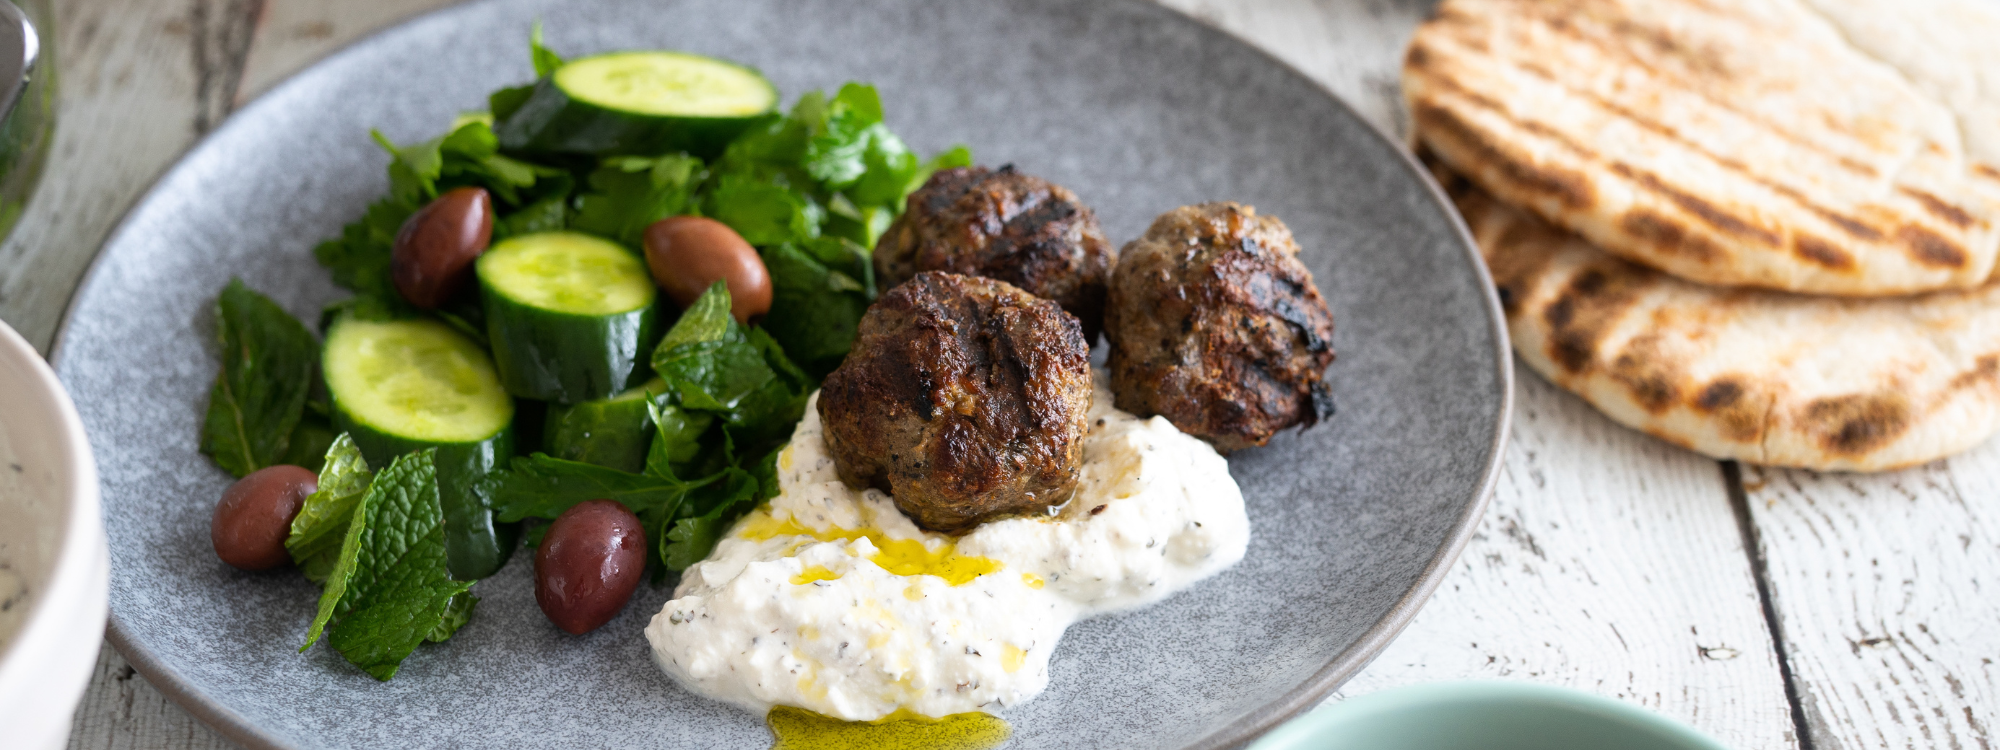 Lamb & Mushroom Blended Greek Meatballs with Feta Sauce & Cucumber Salad_summeredition72